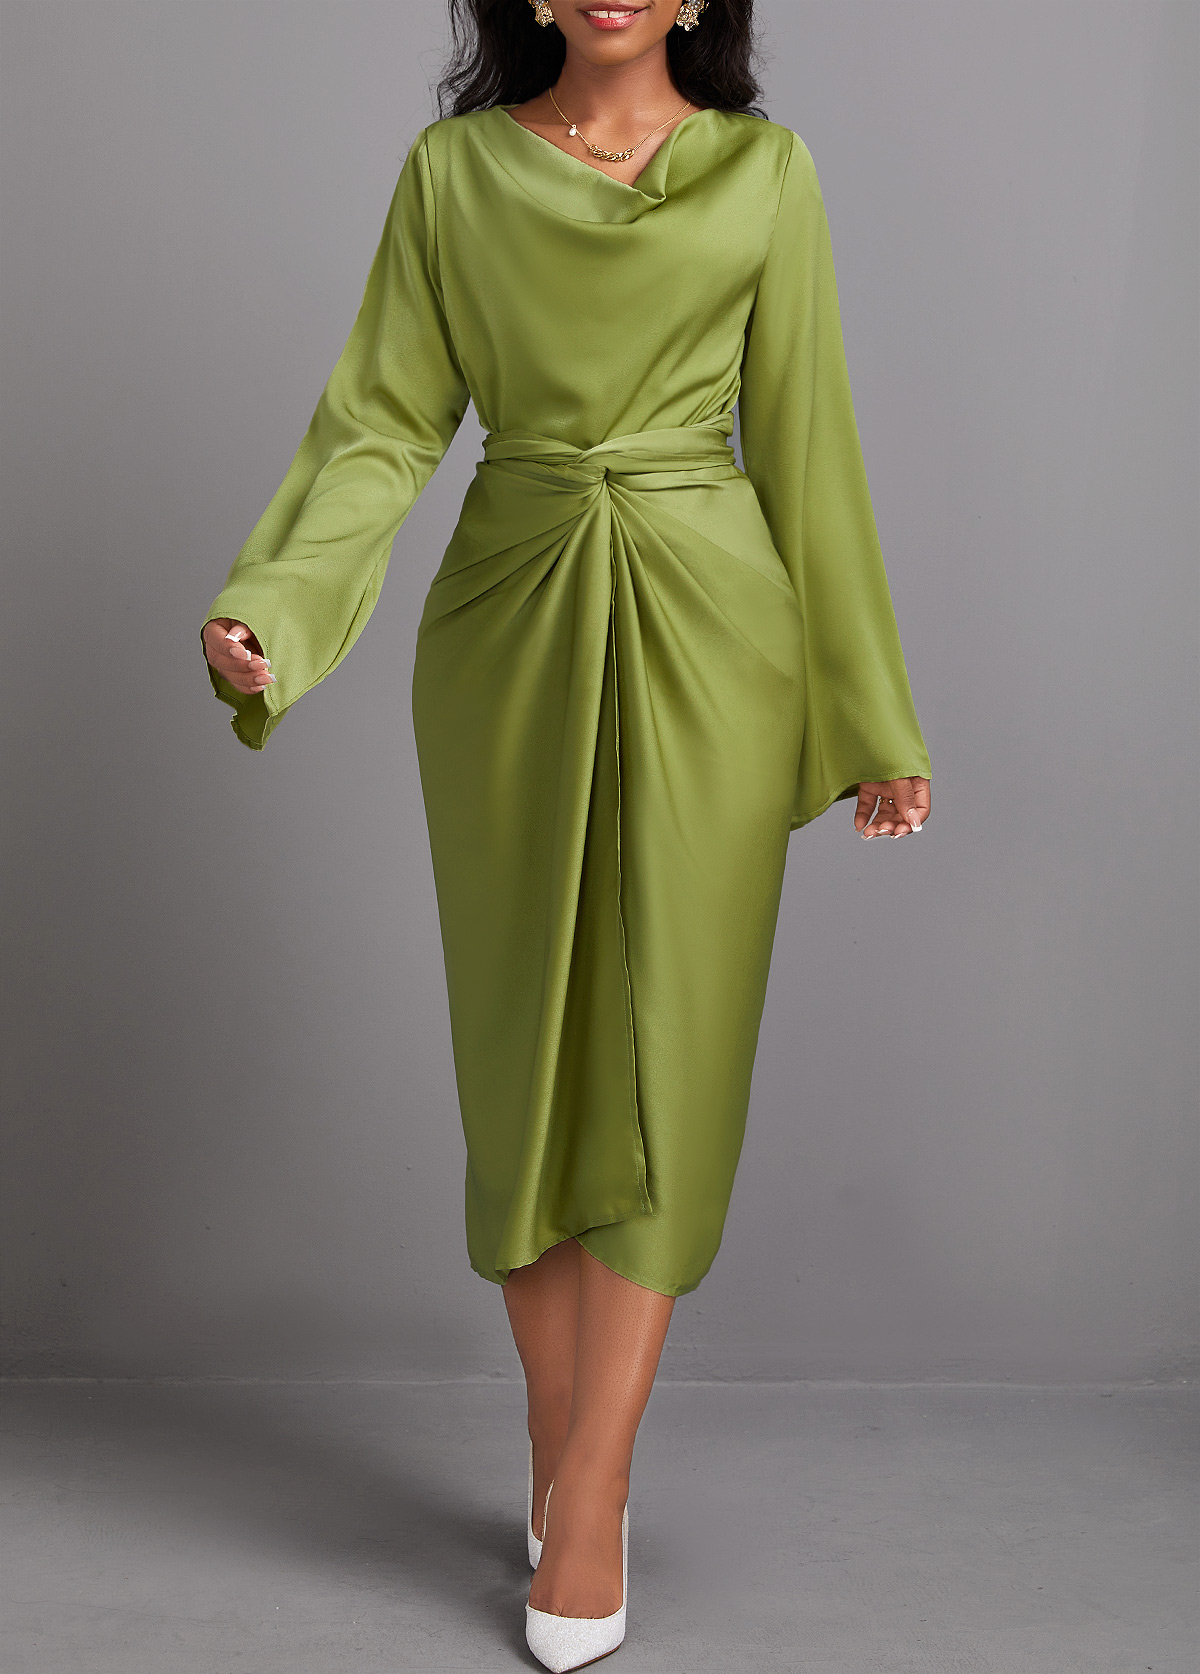 Avocado Green Two Piece Long Sleeve Top and Bodycon Skirt